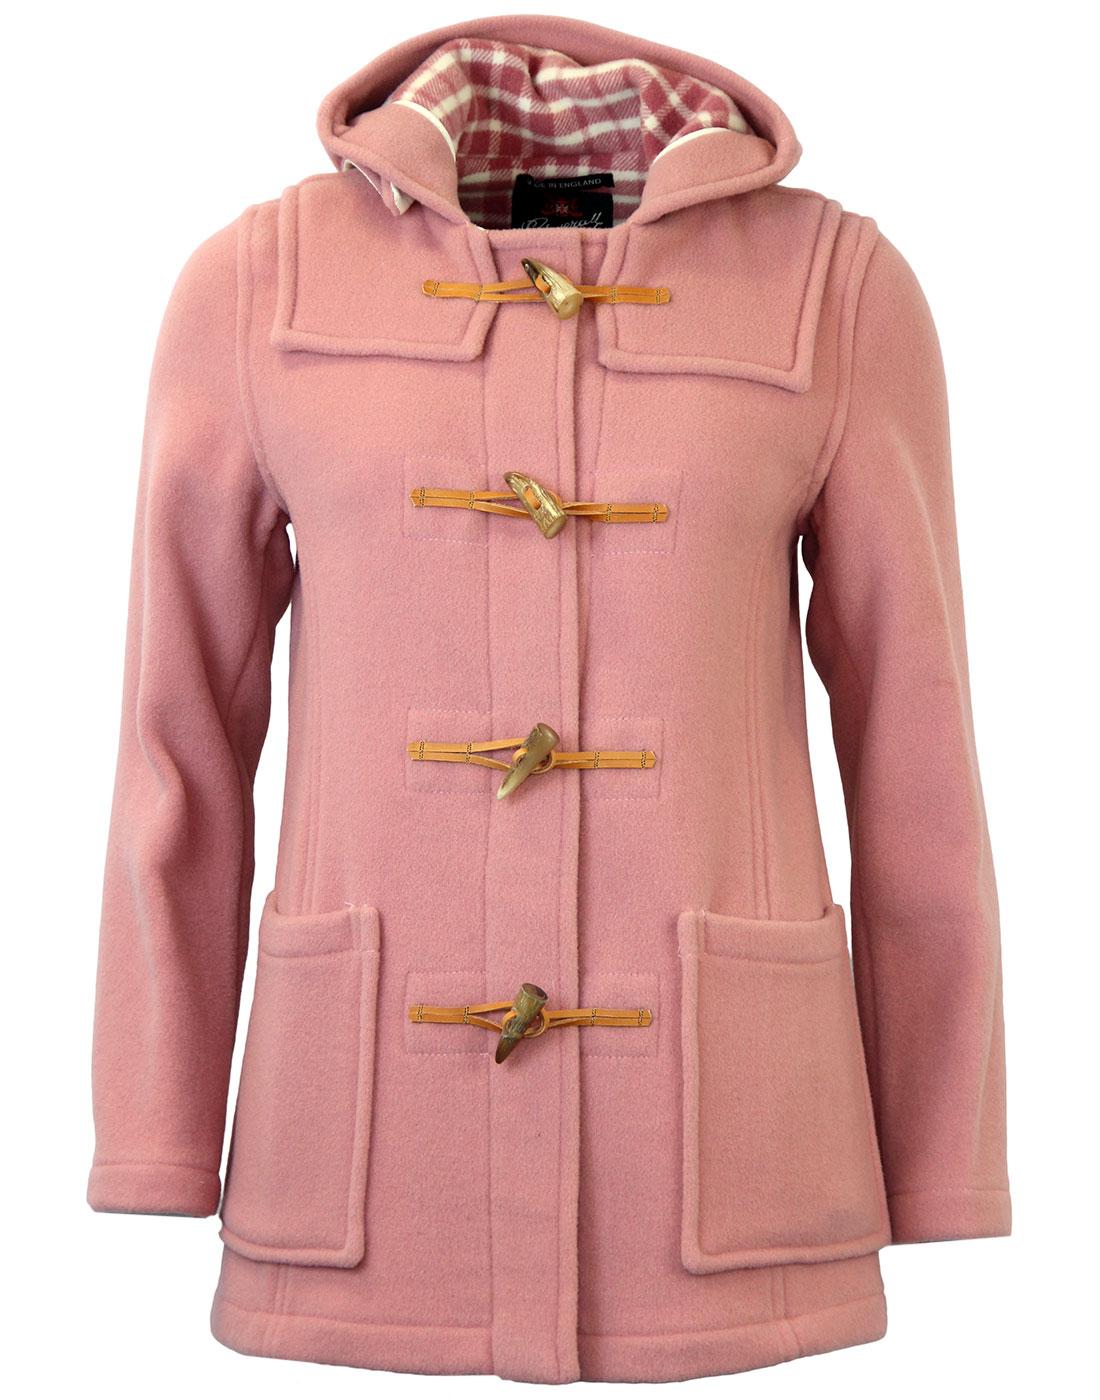 Ladies Pink Duffle Coat - JacketIn